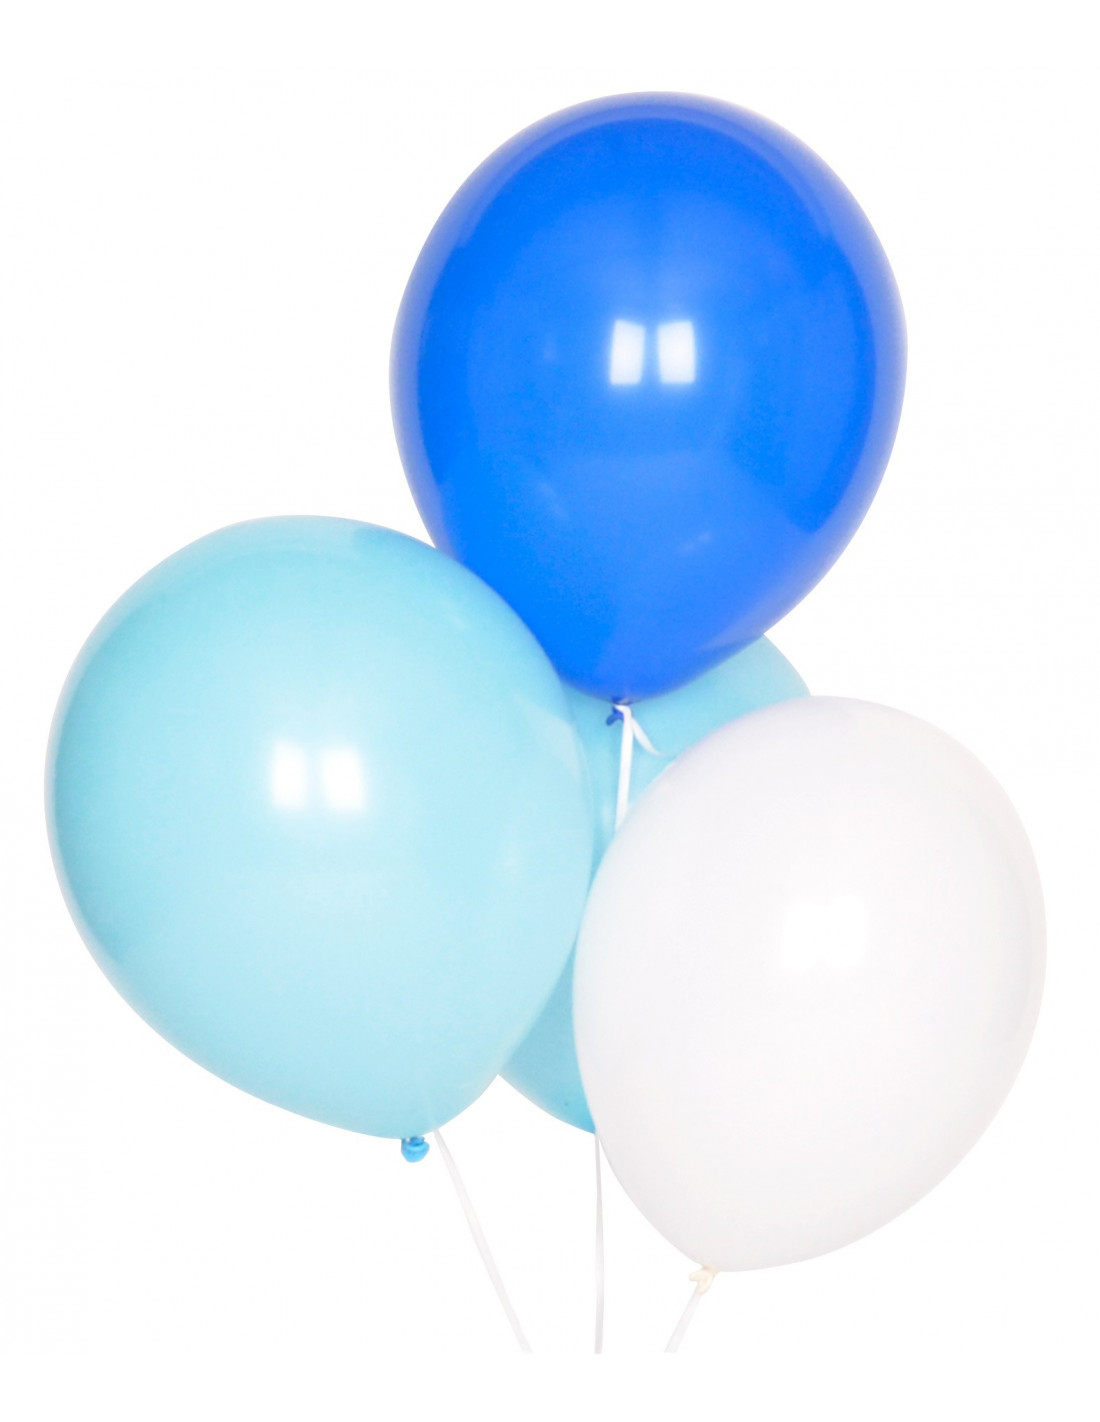 10 Ballons Latex Bleus, Bleu Ciel et Blanc - Les Bambetises